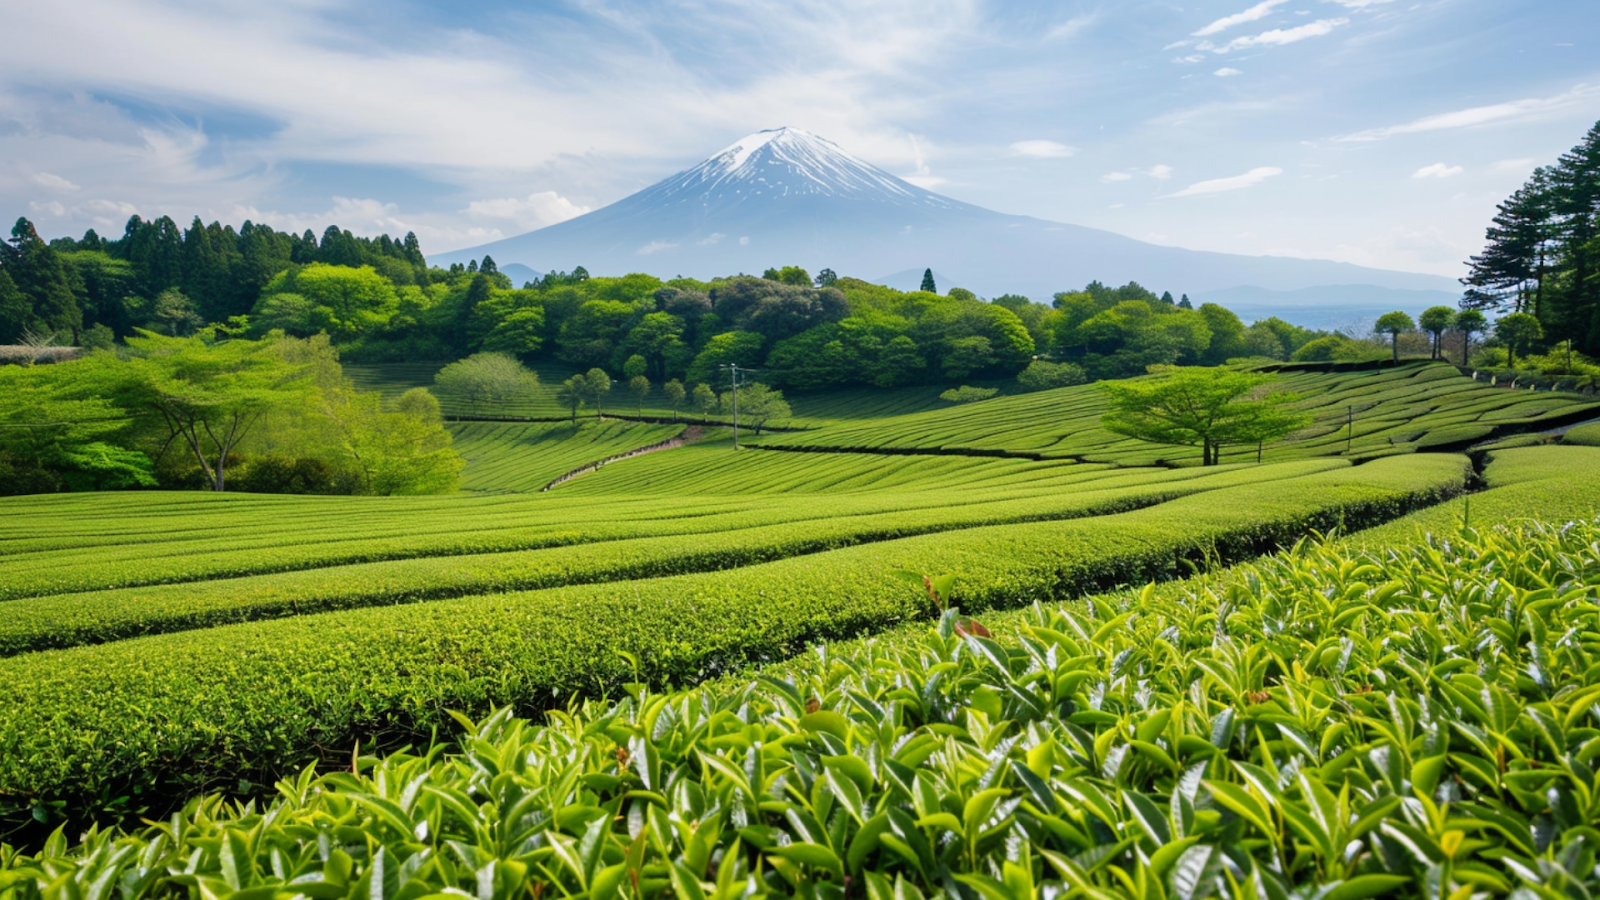 Green tea plantations near Osaka, Japan with Mount Fuji in the background